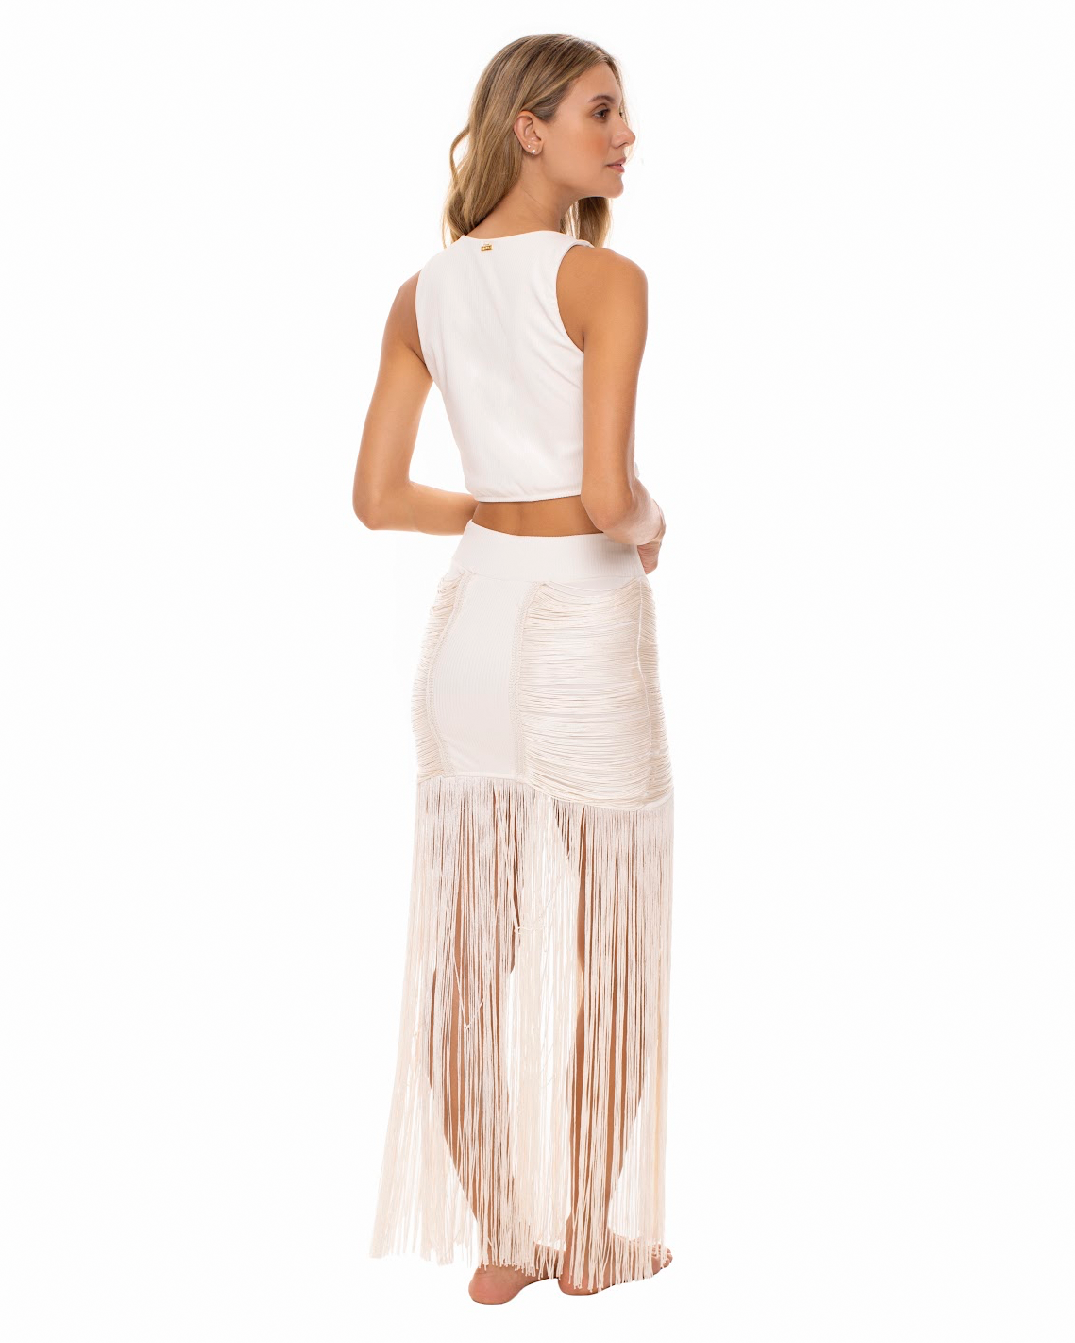 Milonga - Skirt Shinny Marfil